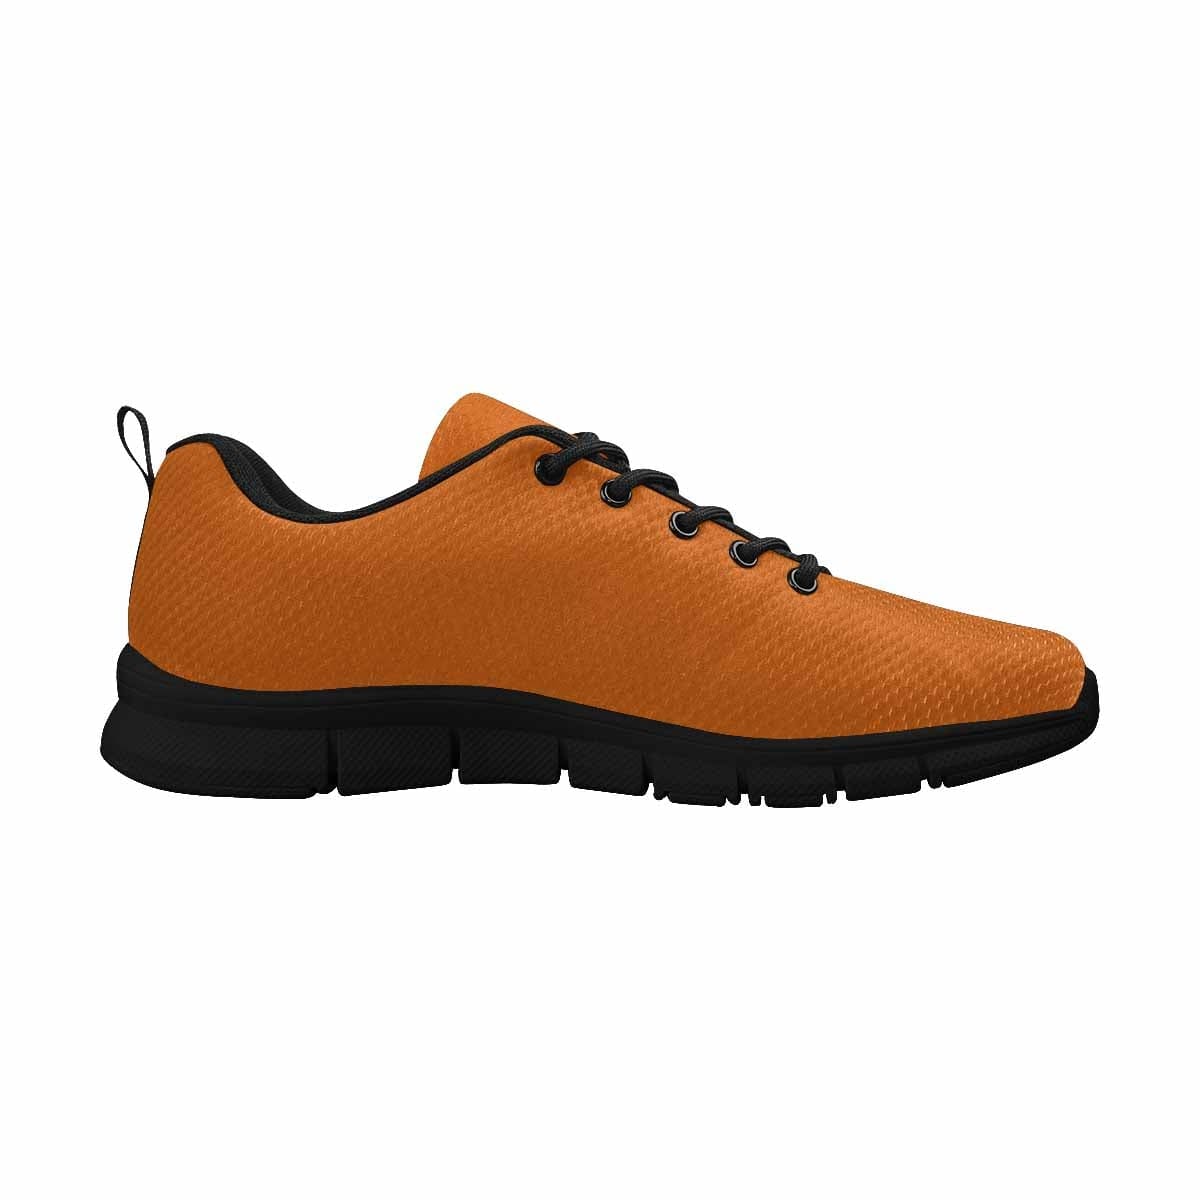 Sneakers For Women Burnt Orange - Womens | Sneakers | Running